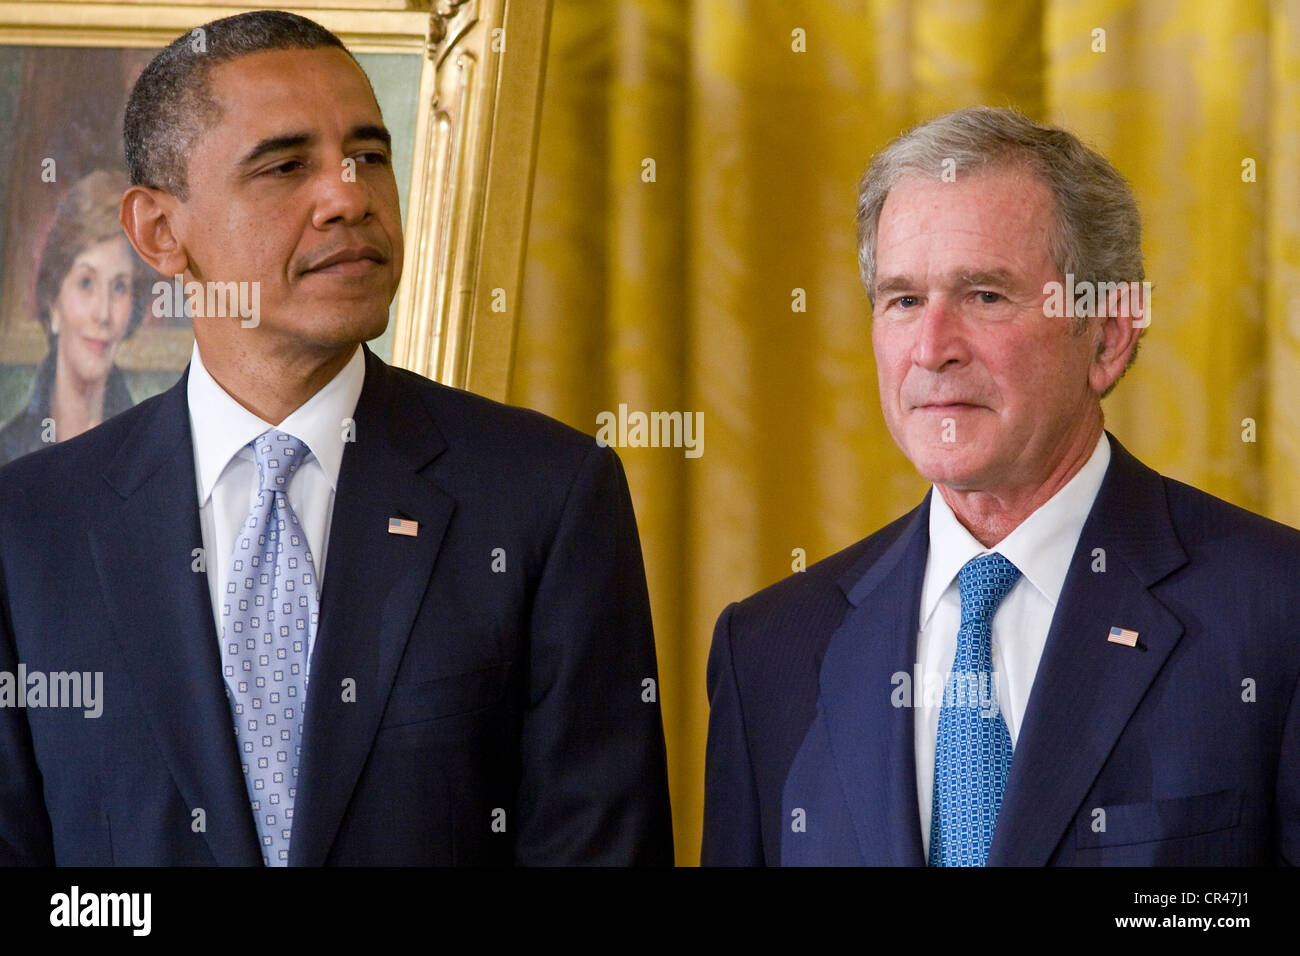 President Barack Obama and President George W. Bush at a White House ceremony. Stock Photo